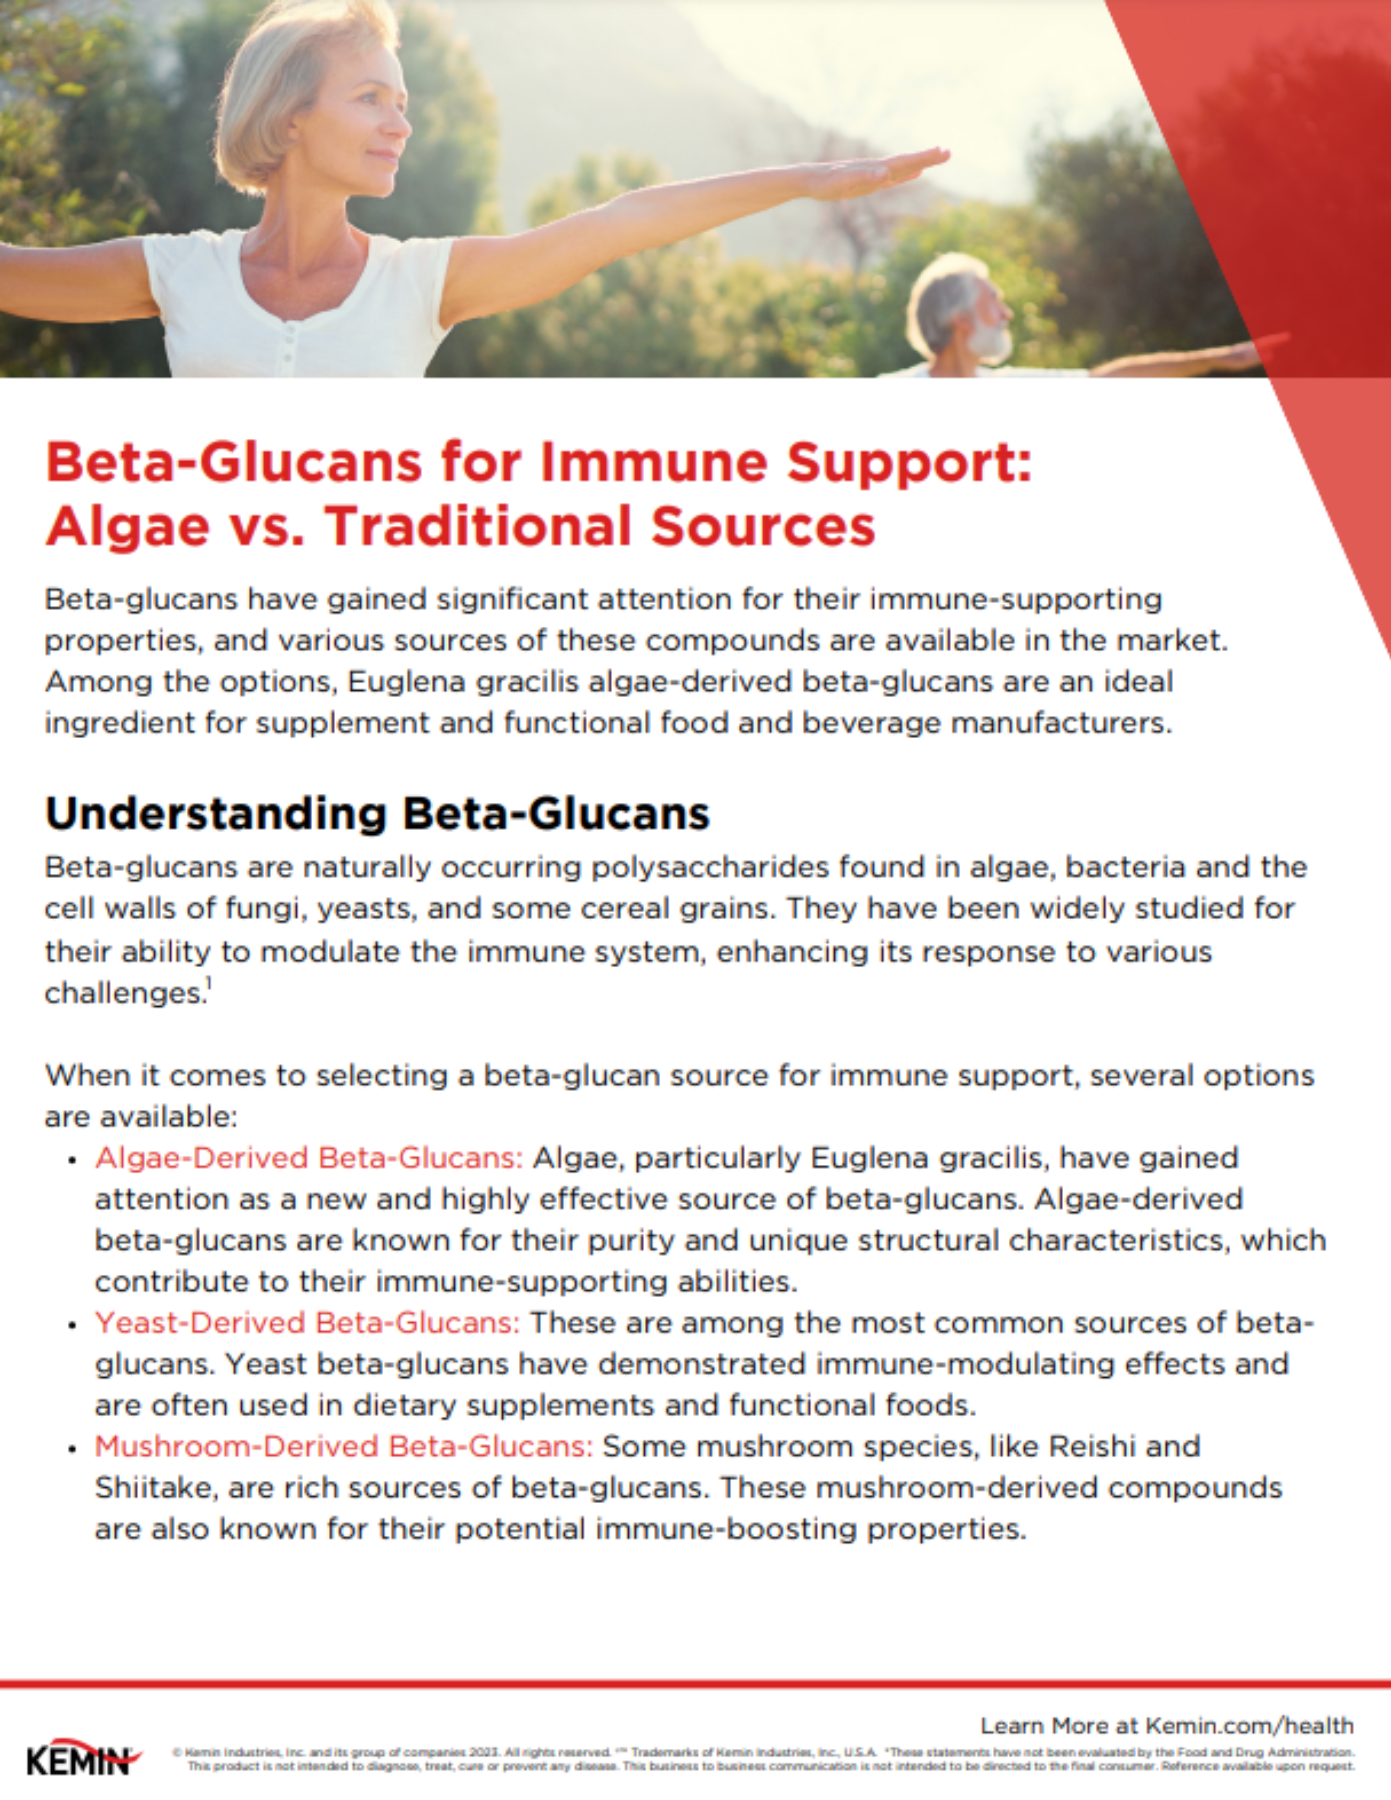 Beta-Glucans for Immune Support - 6